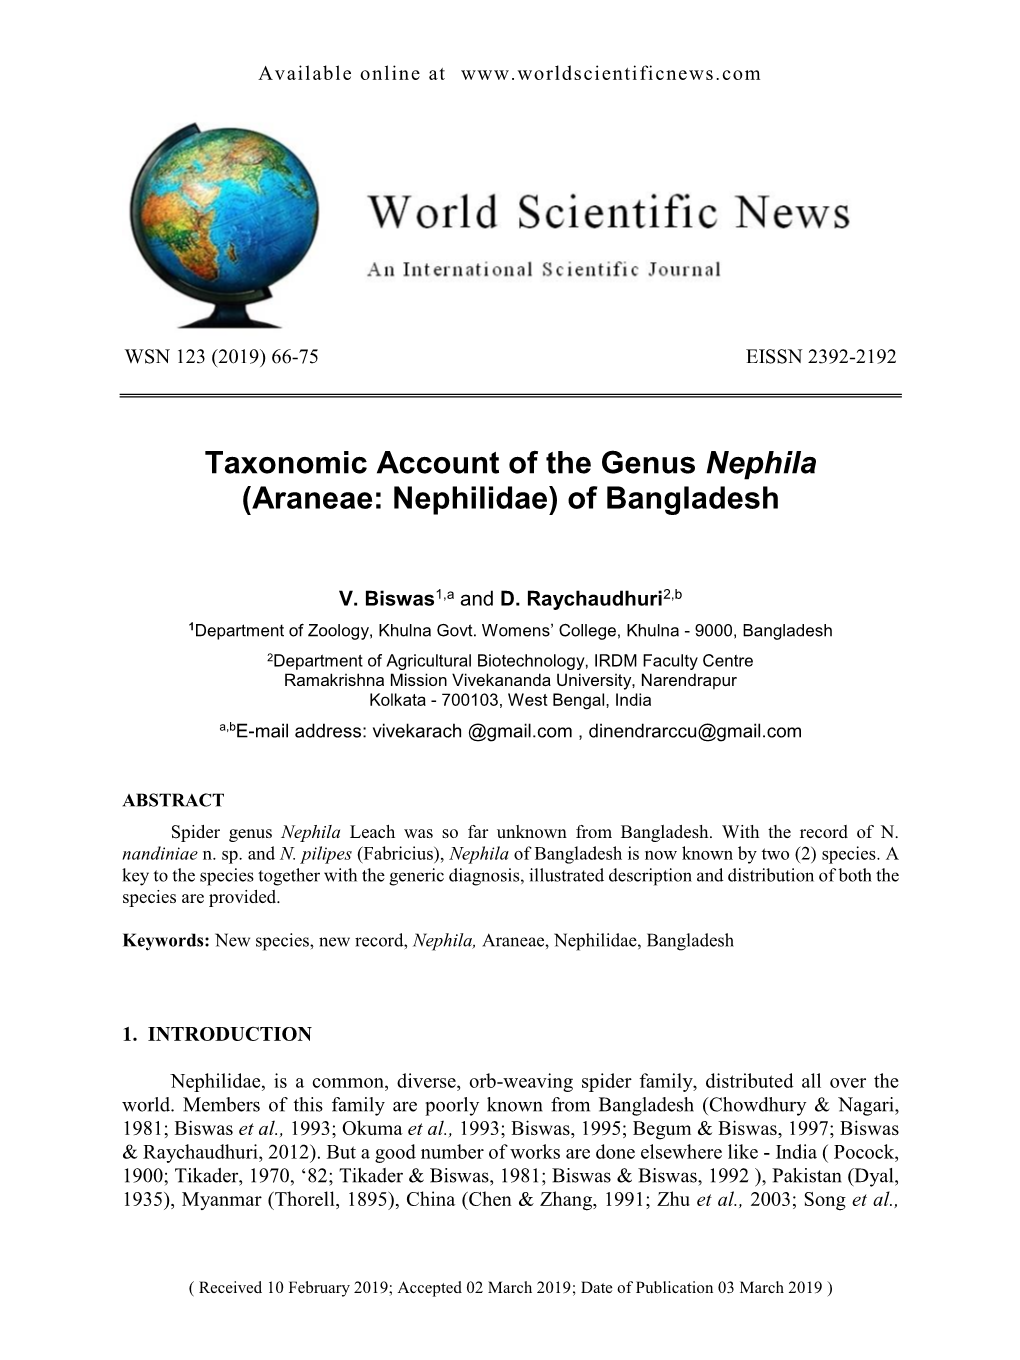 Taxonomic Account of the Genus Nephila (Araneae: Nephilidae) of Bangladesh